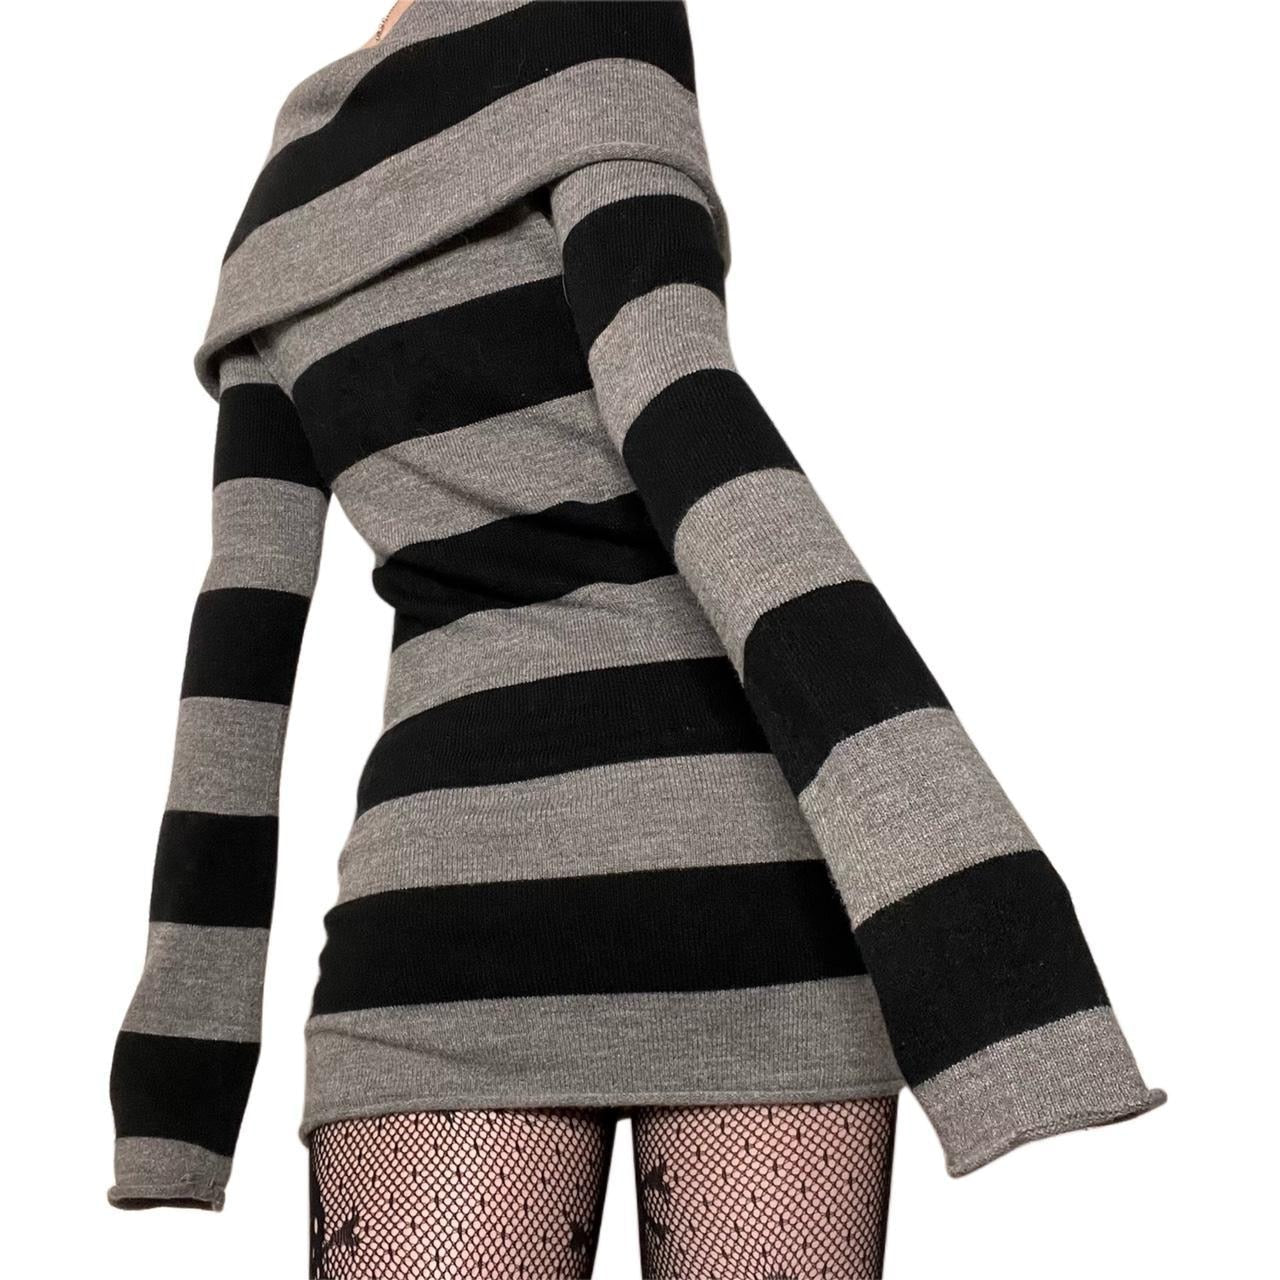 Striped Sweater Dress